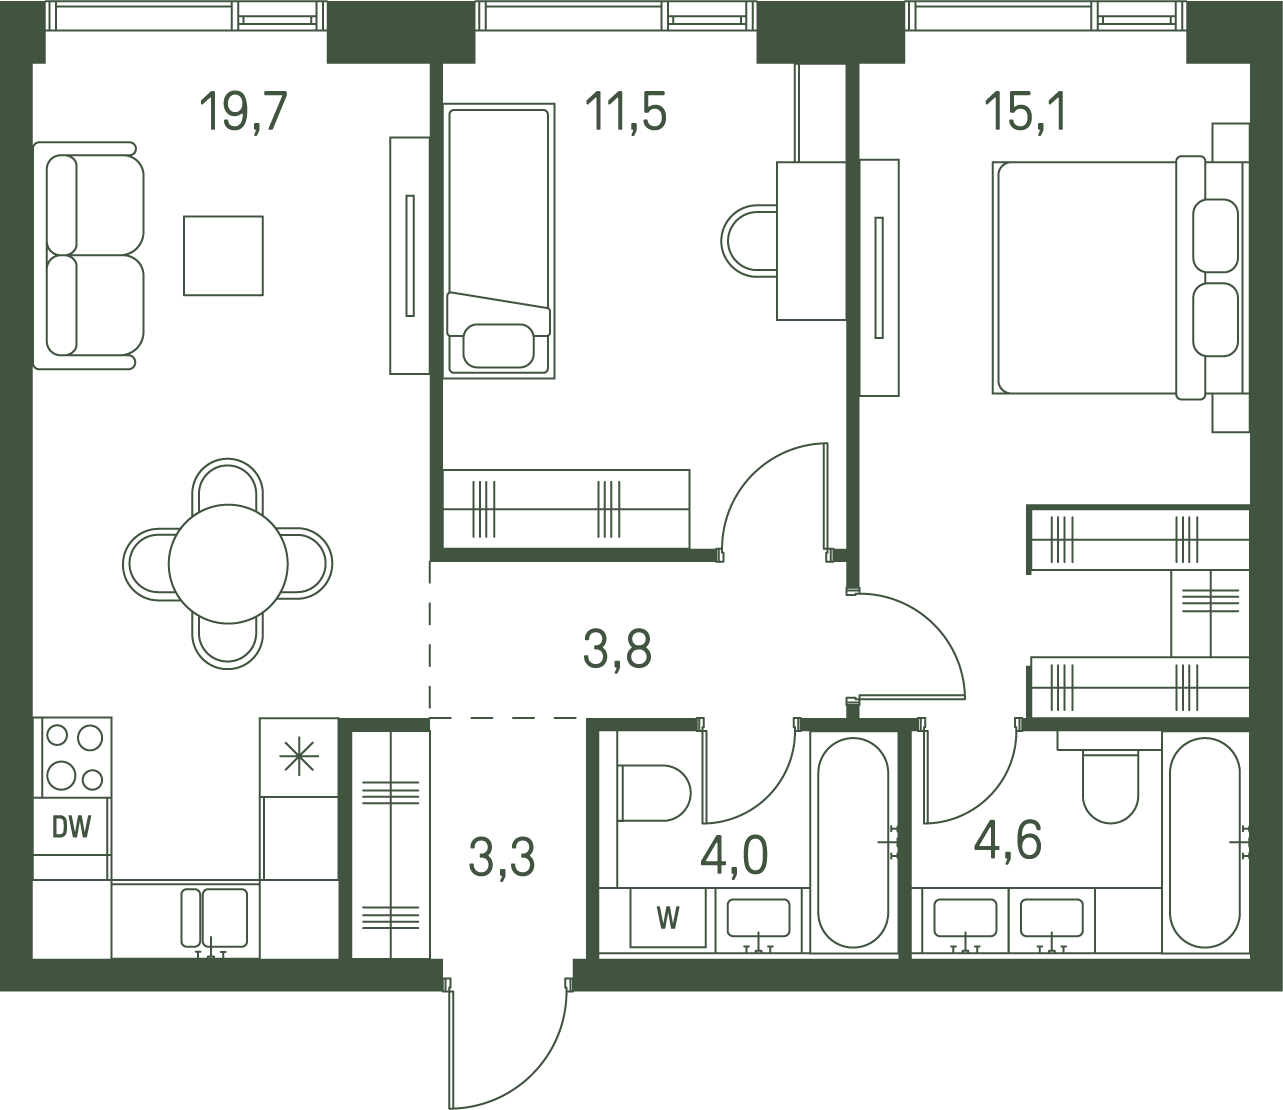 2 комн. квартира, 62 м², 10 этаж 